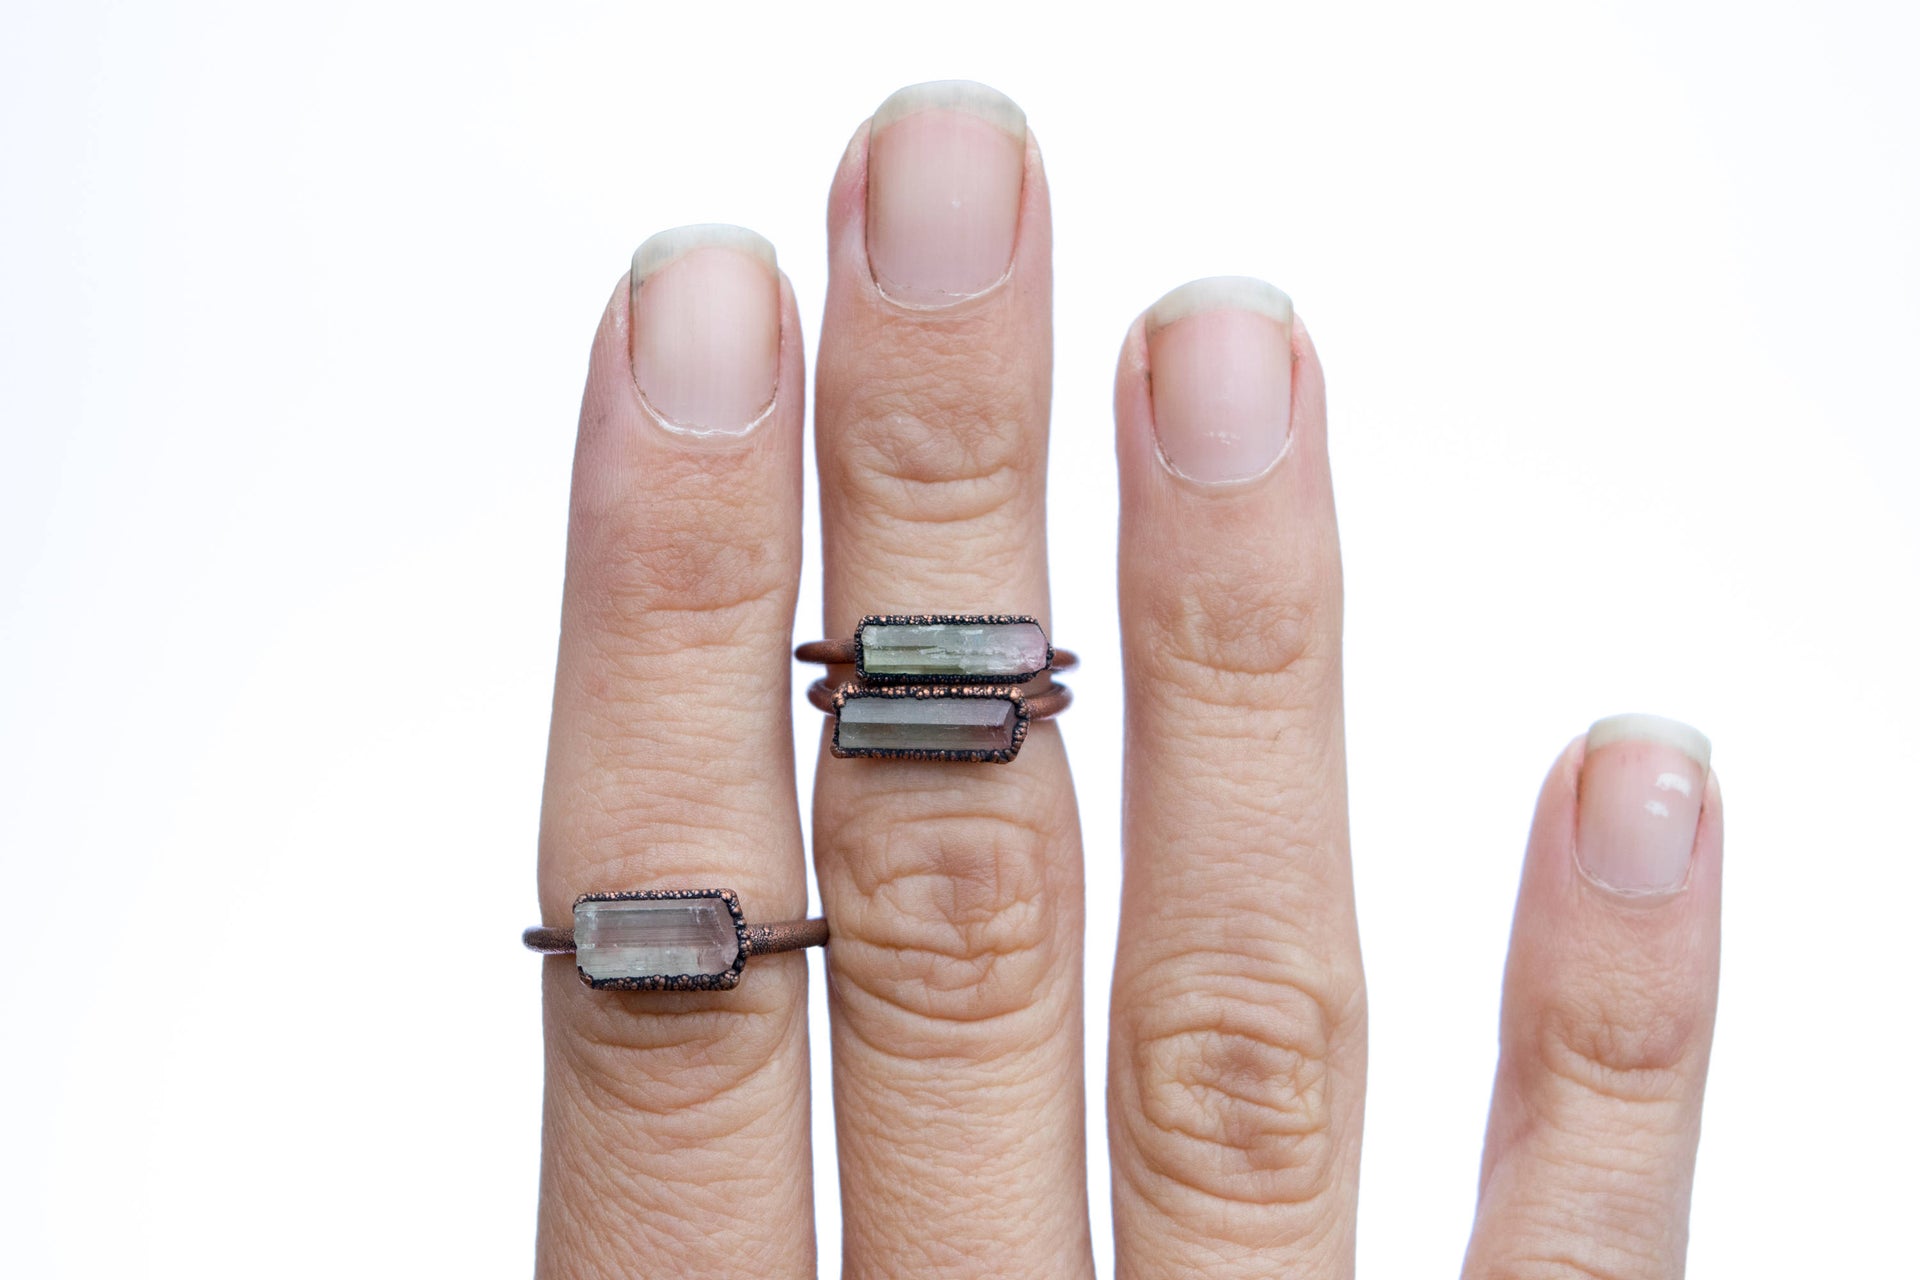 Bicolor tourmaline ring | Raw tourmaline ring